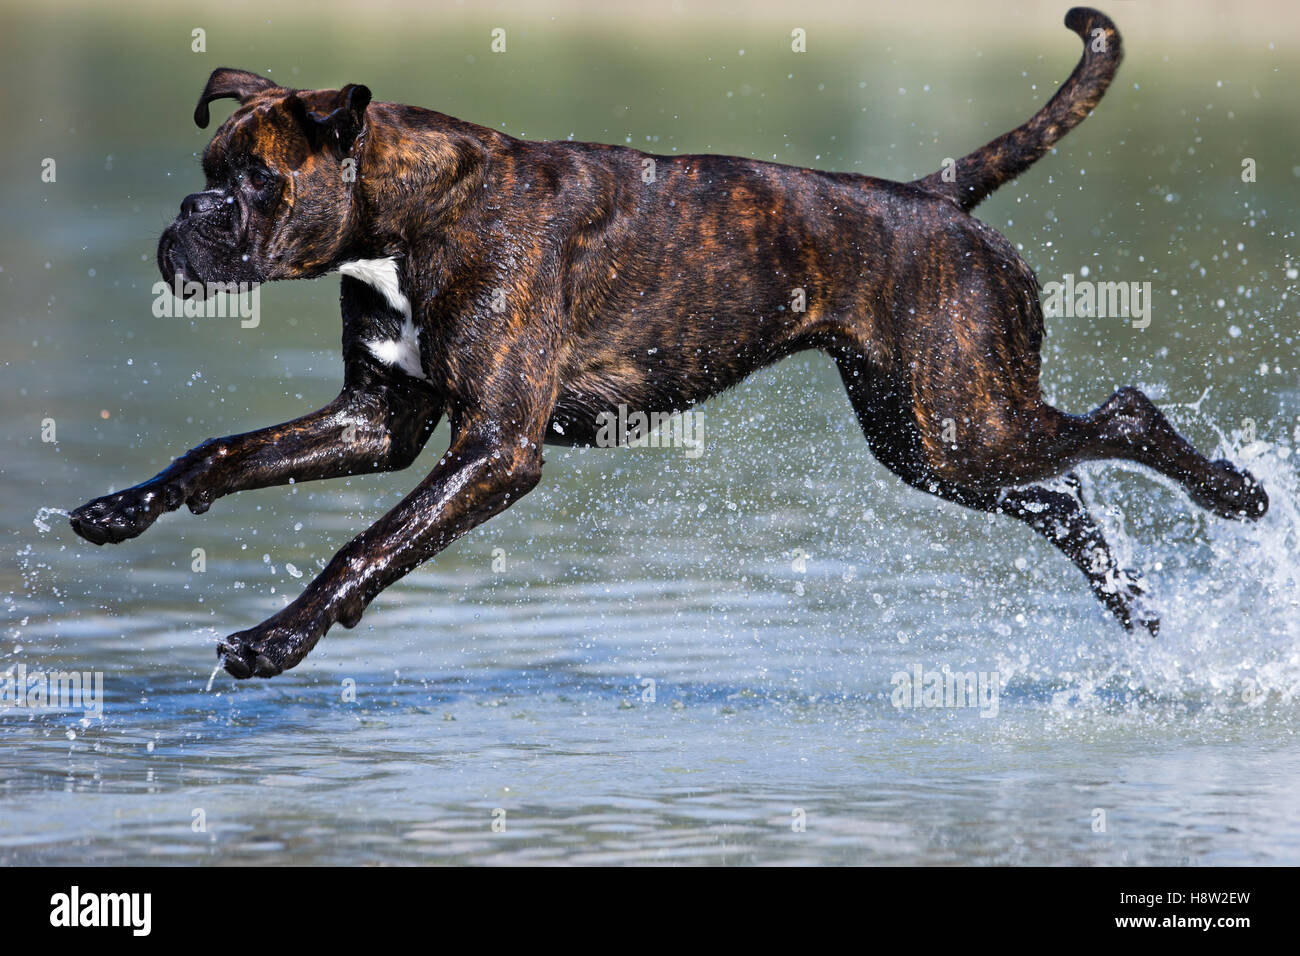 Boxer running in water, Austria Stock Photo